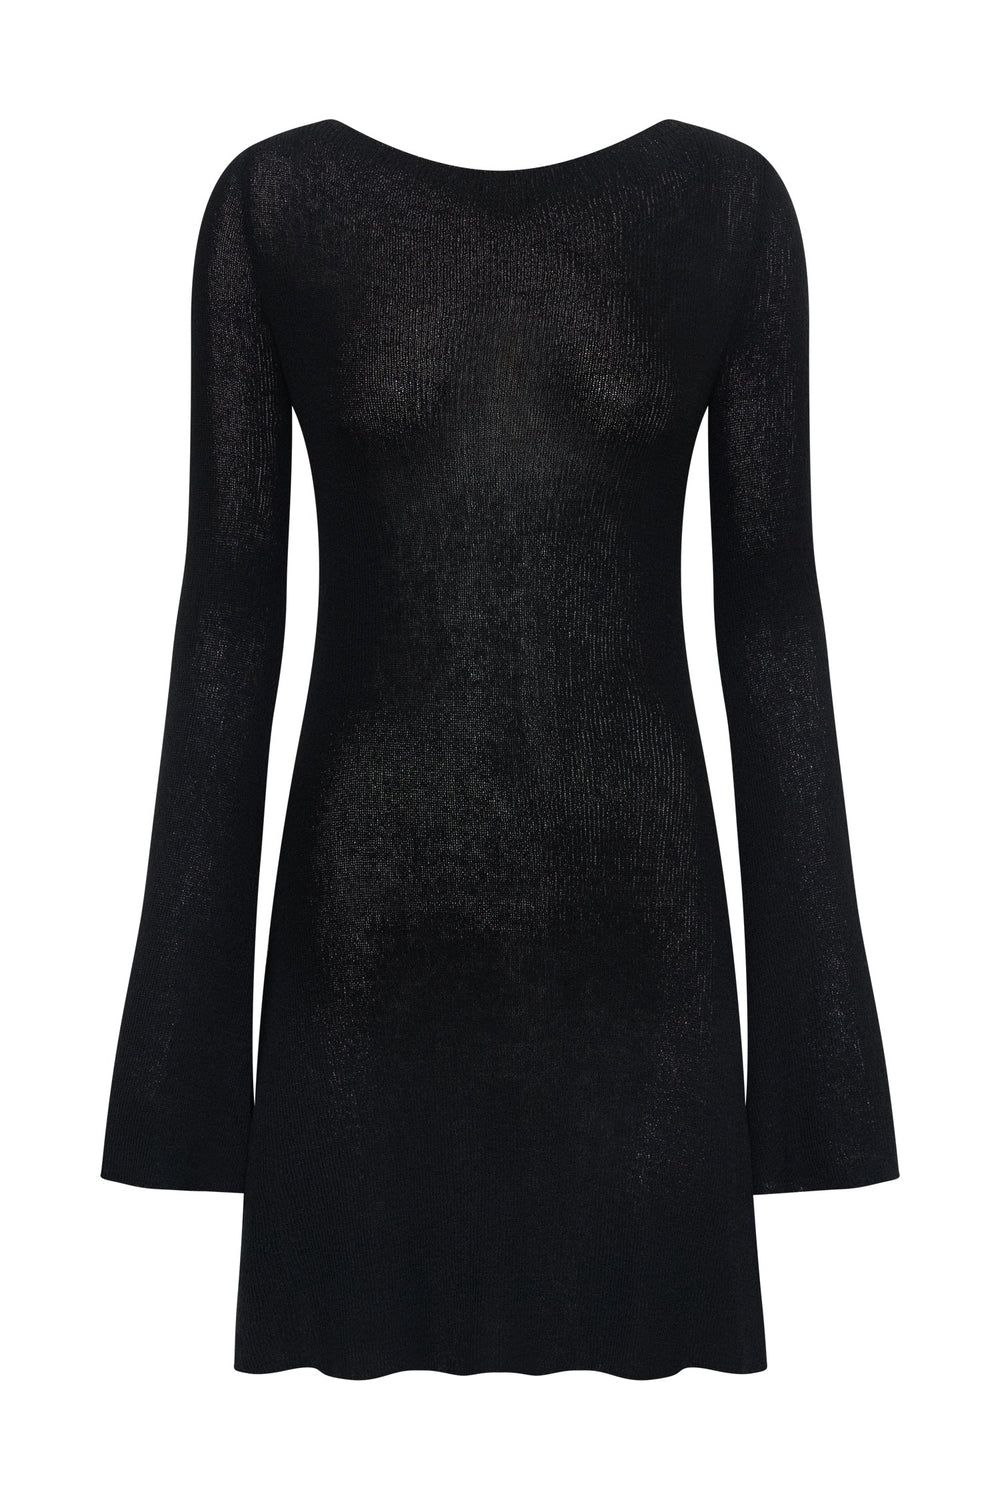 Zahra Long Sleeve Open Back Mini Knit Dress - Black